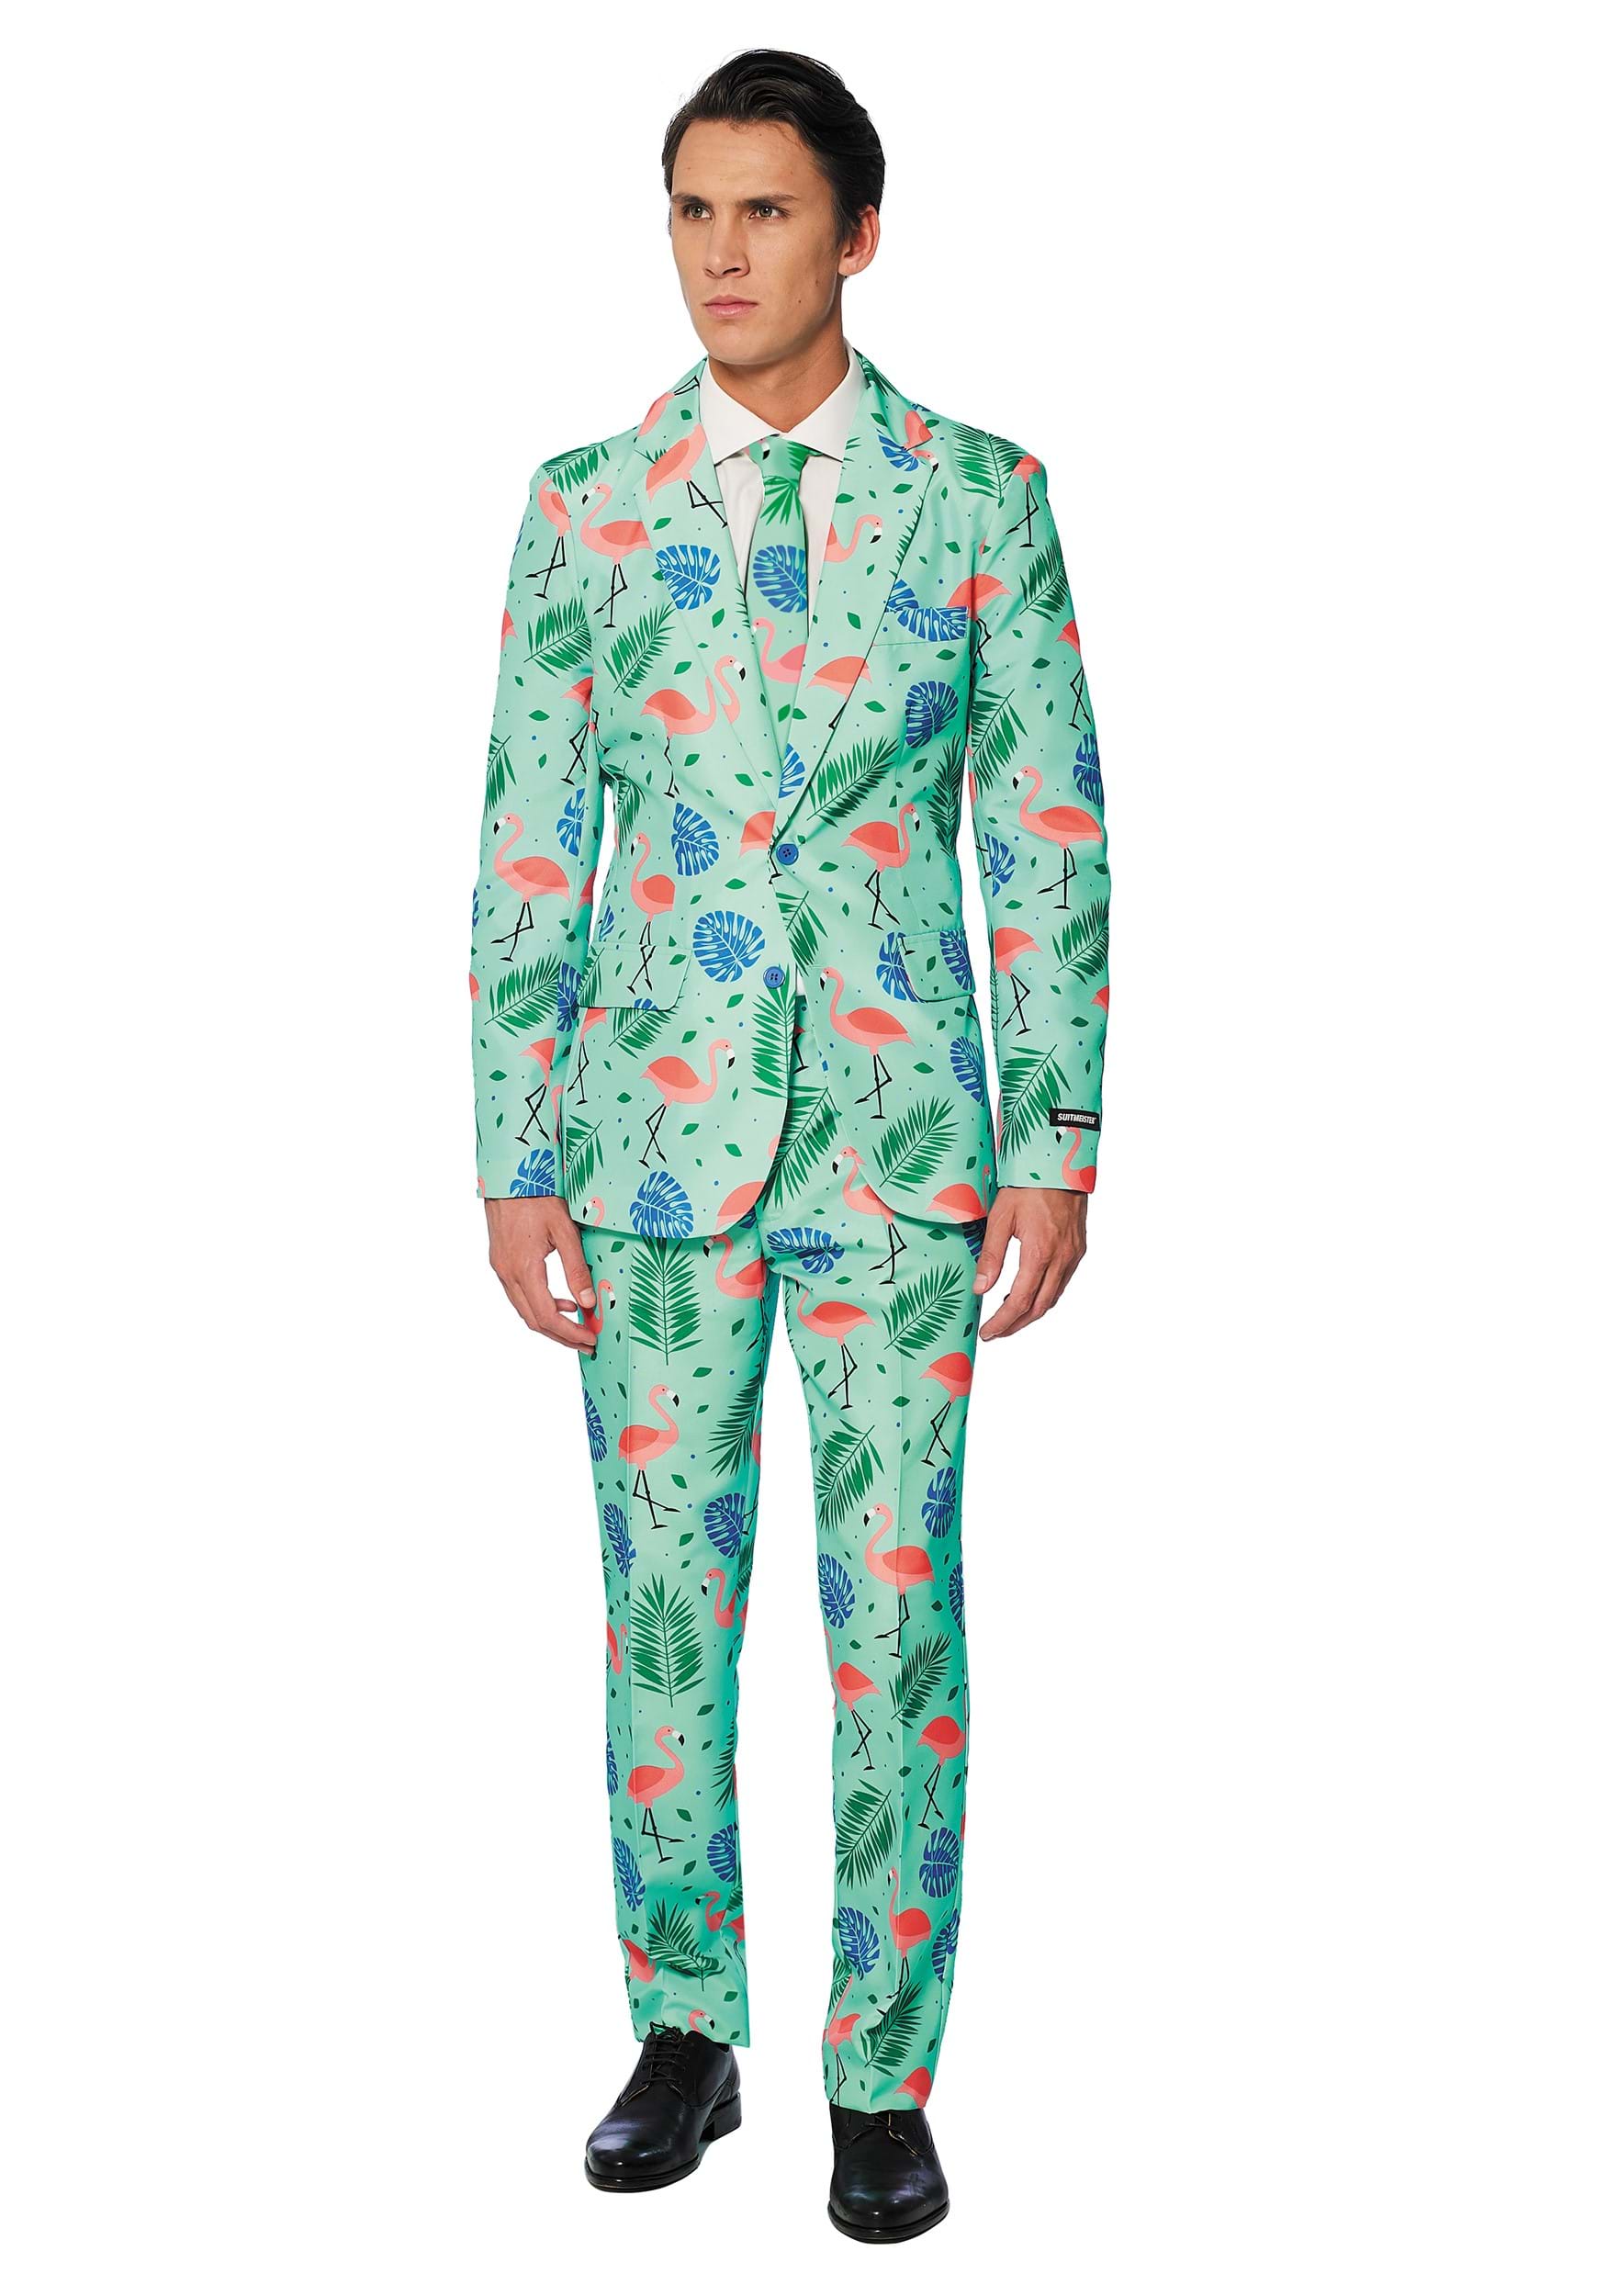 Men's Suitmeister Tropical Suit Costume